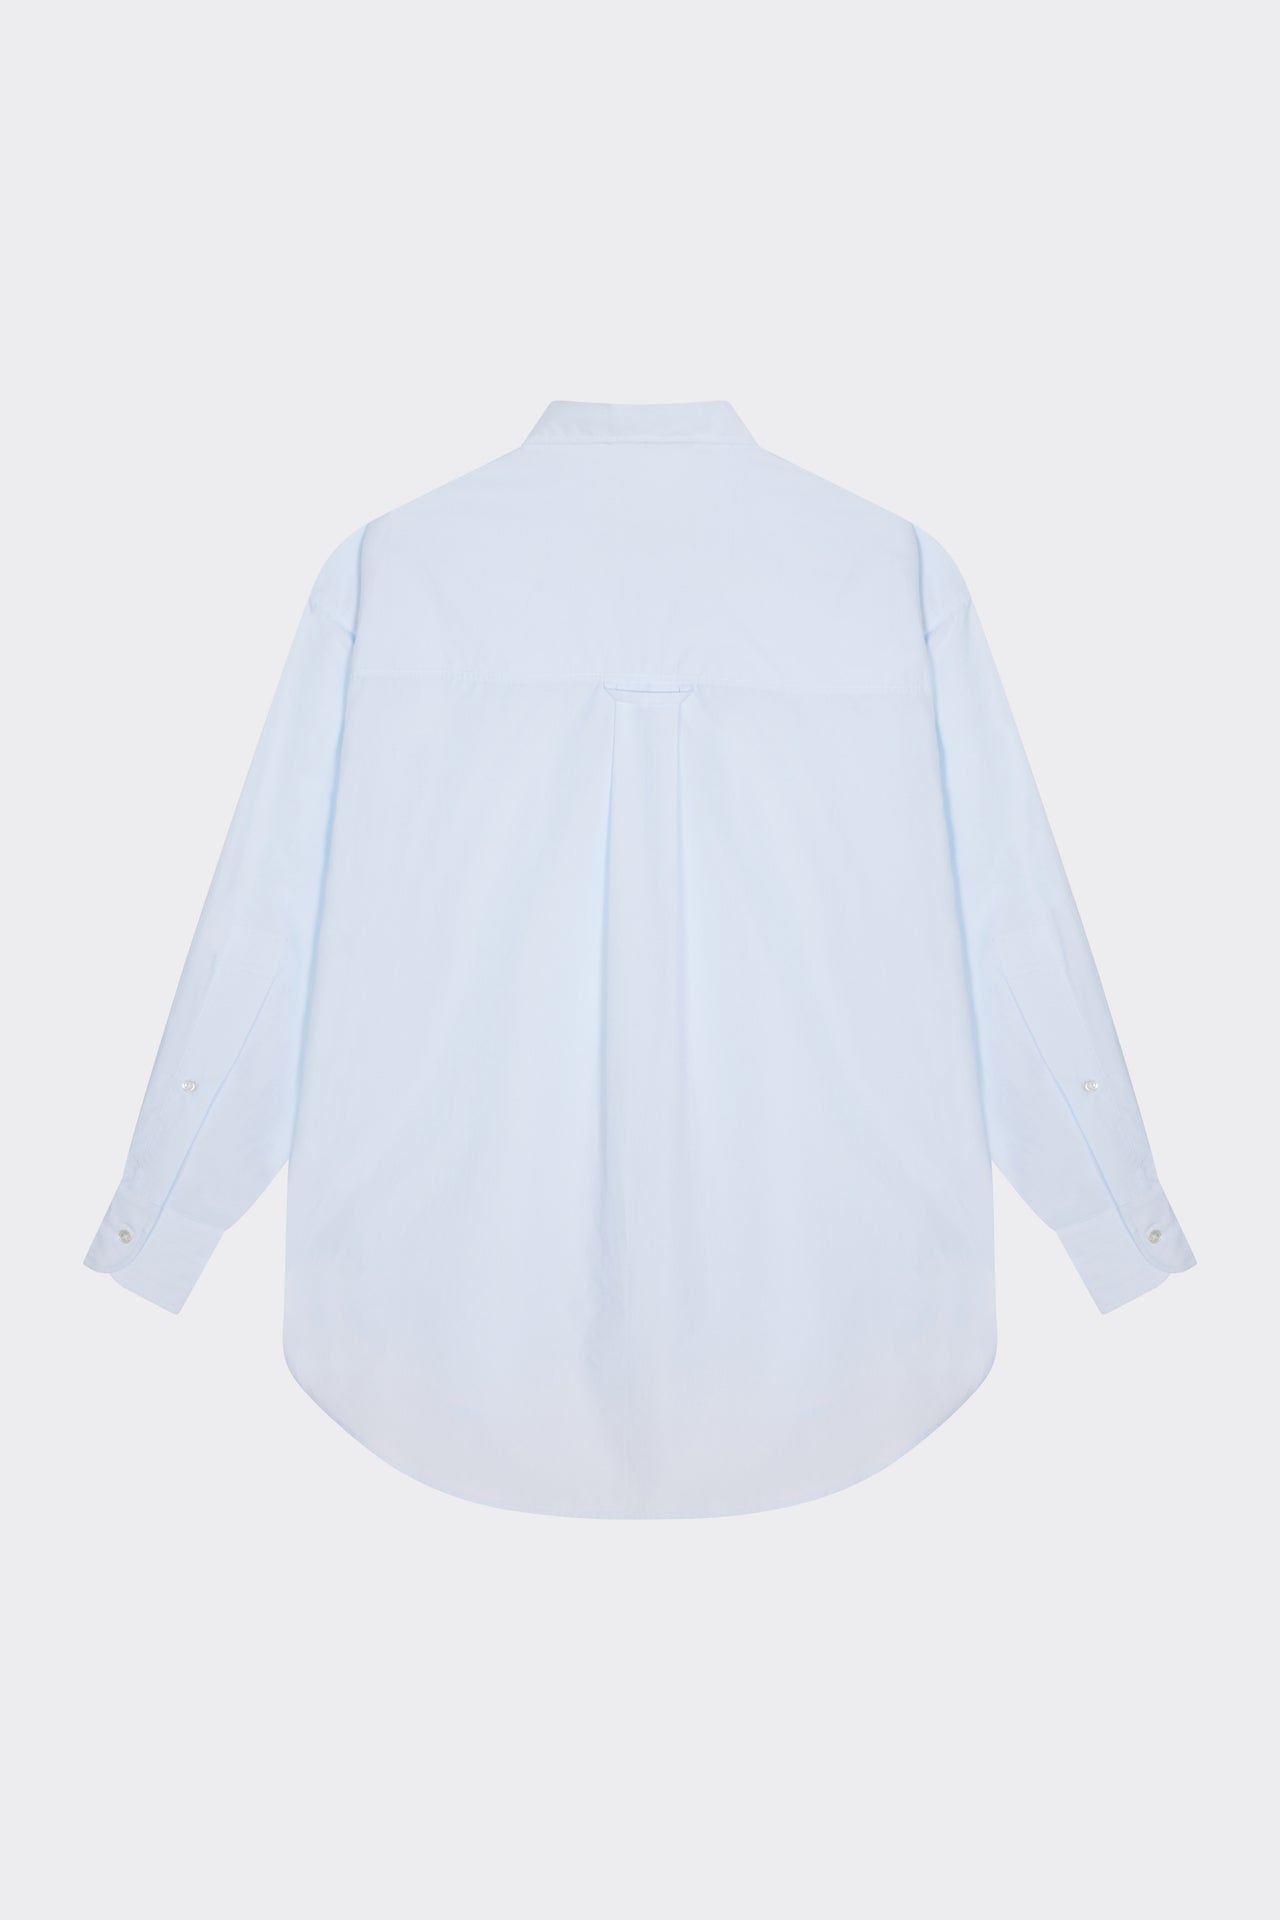 Effia Shirt in Pale Blue | Noon By Noor